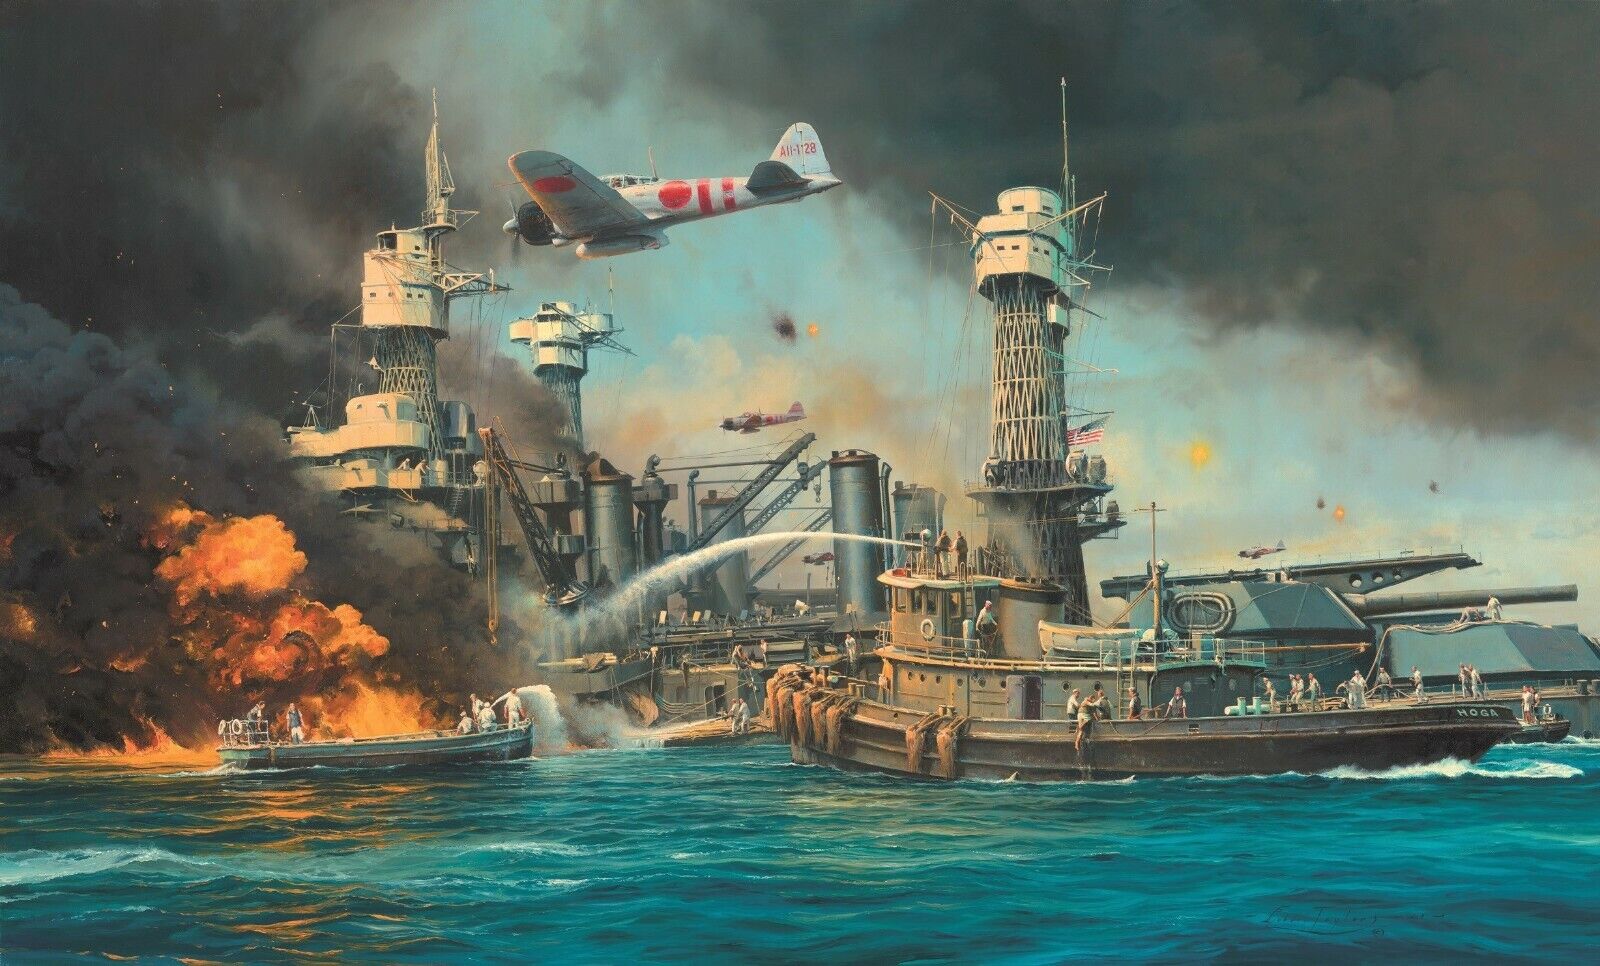 Morning Thunder by Robert Taylor aviation art signed by 9 Pearl Harbor Veterans